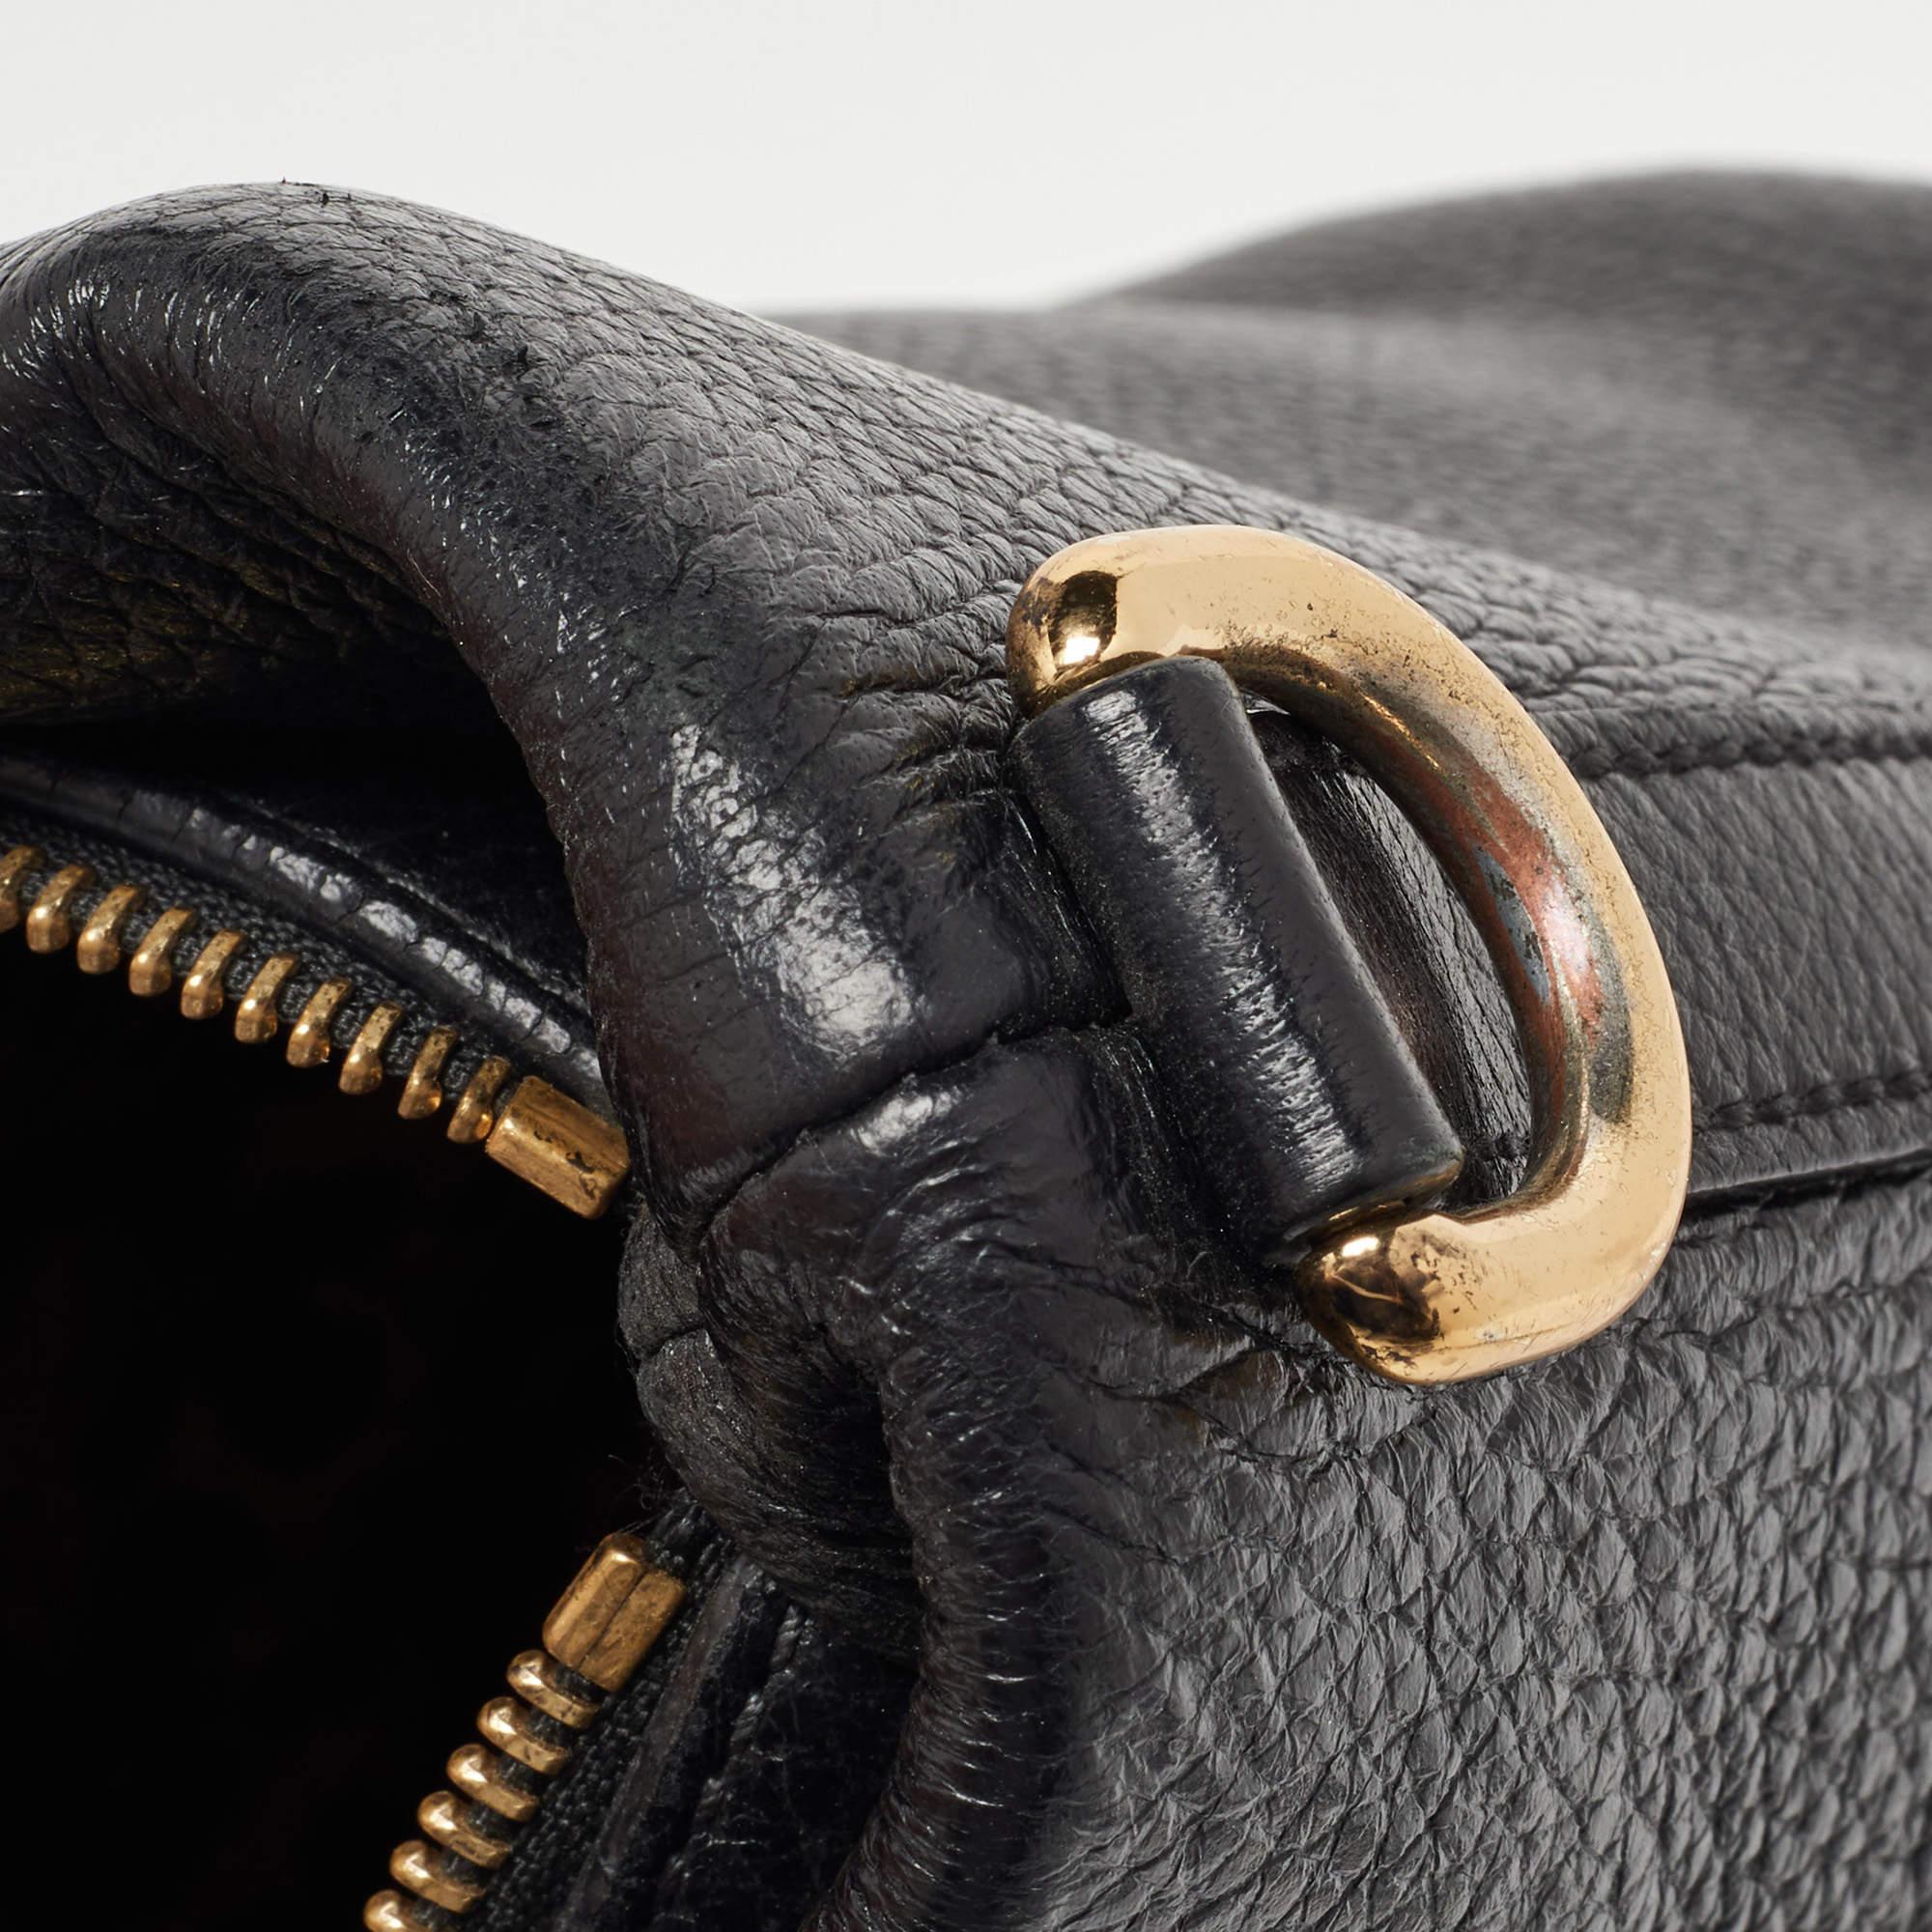 Dolce & Gabbana Black Soft Leather Bucket Bag For Sale 8